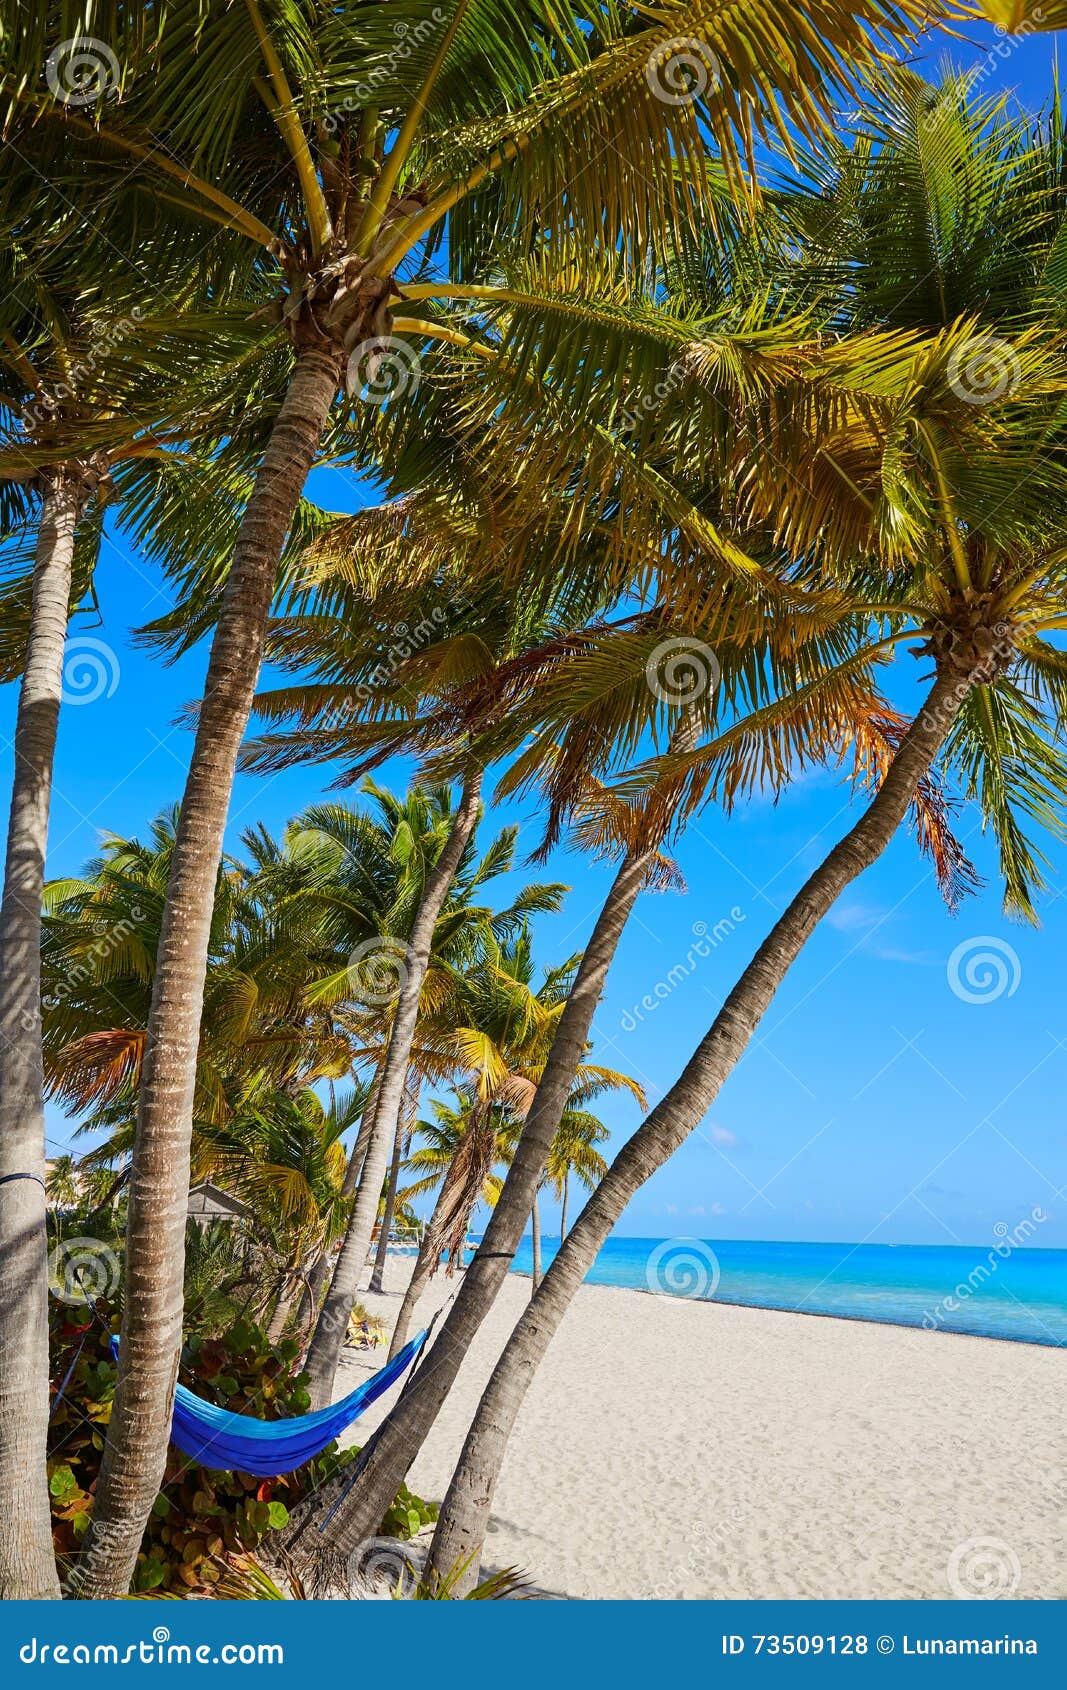 key west florida smathers beach palm trees us